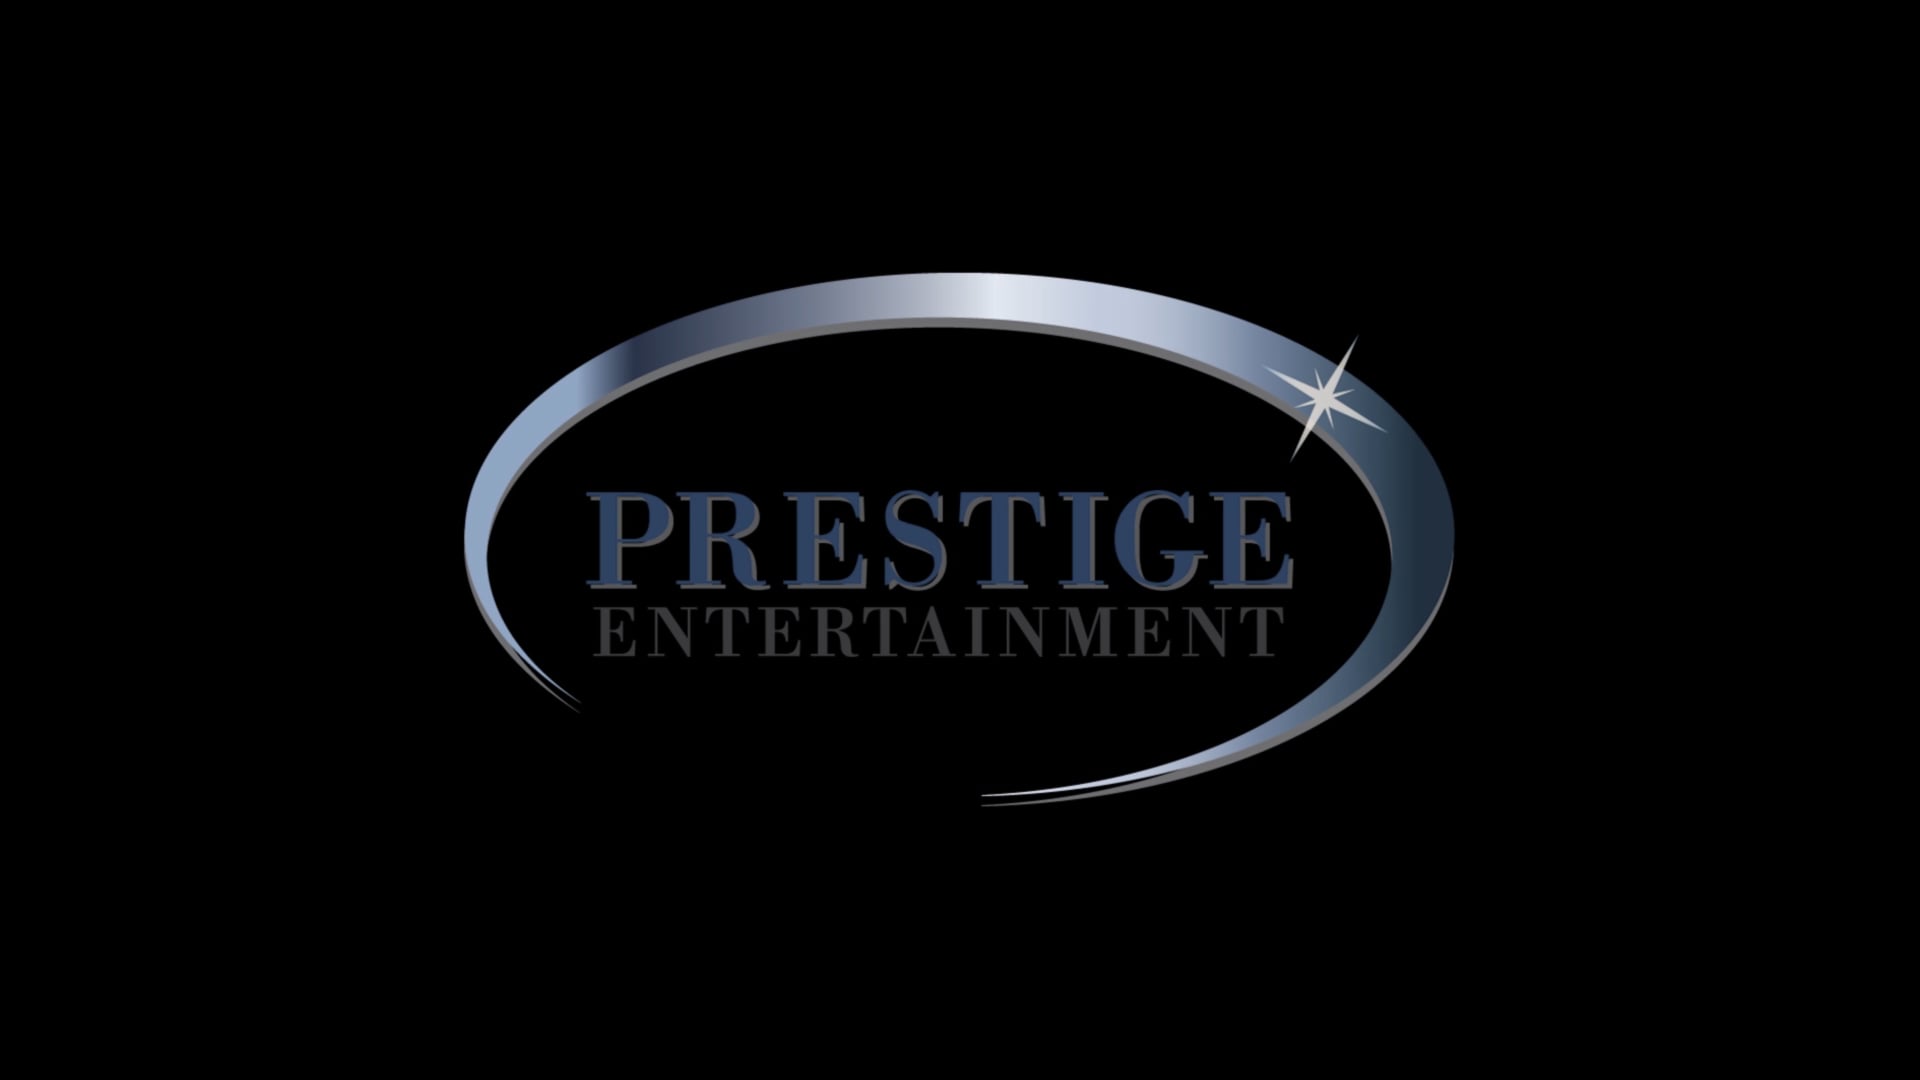 The Prestige Photo Booth!